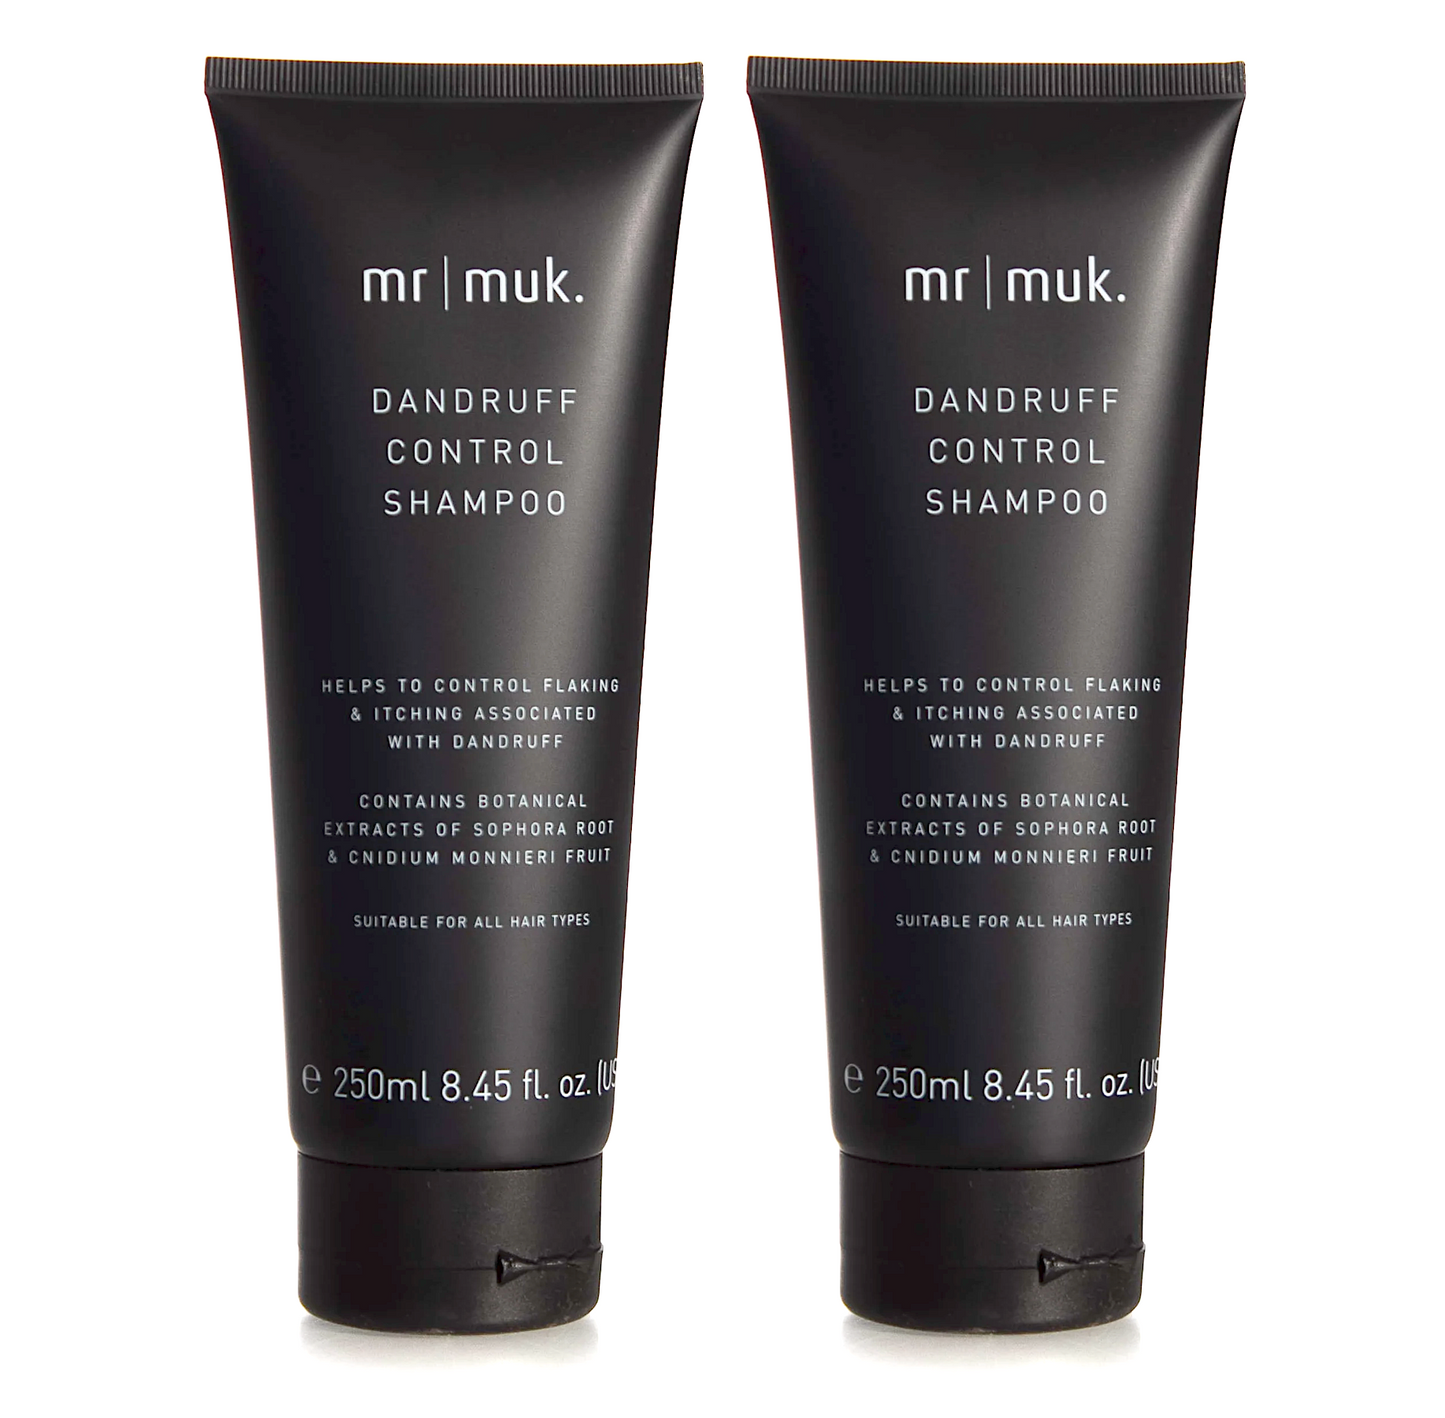 Mr Muk Dandruff Control Shampoo 250ml Duo